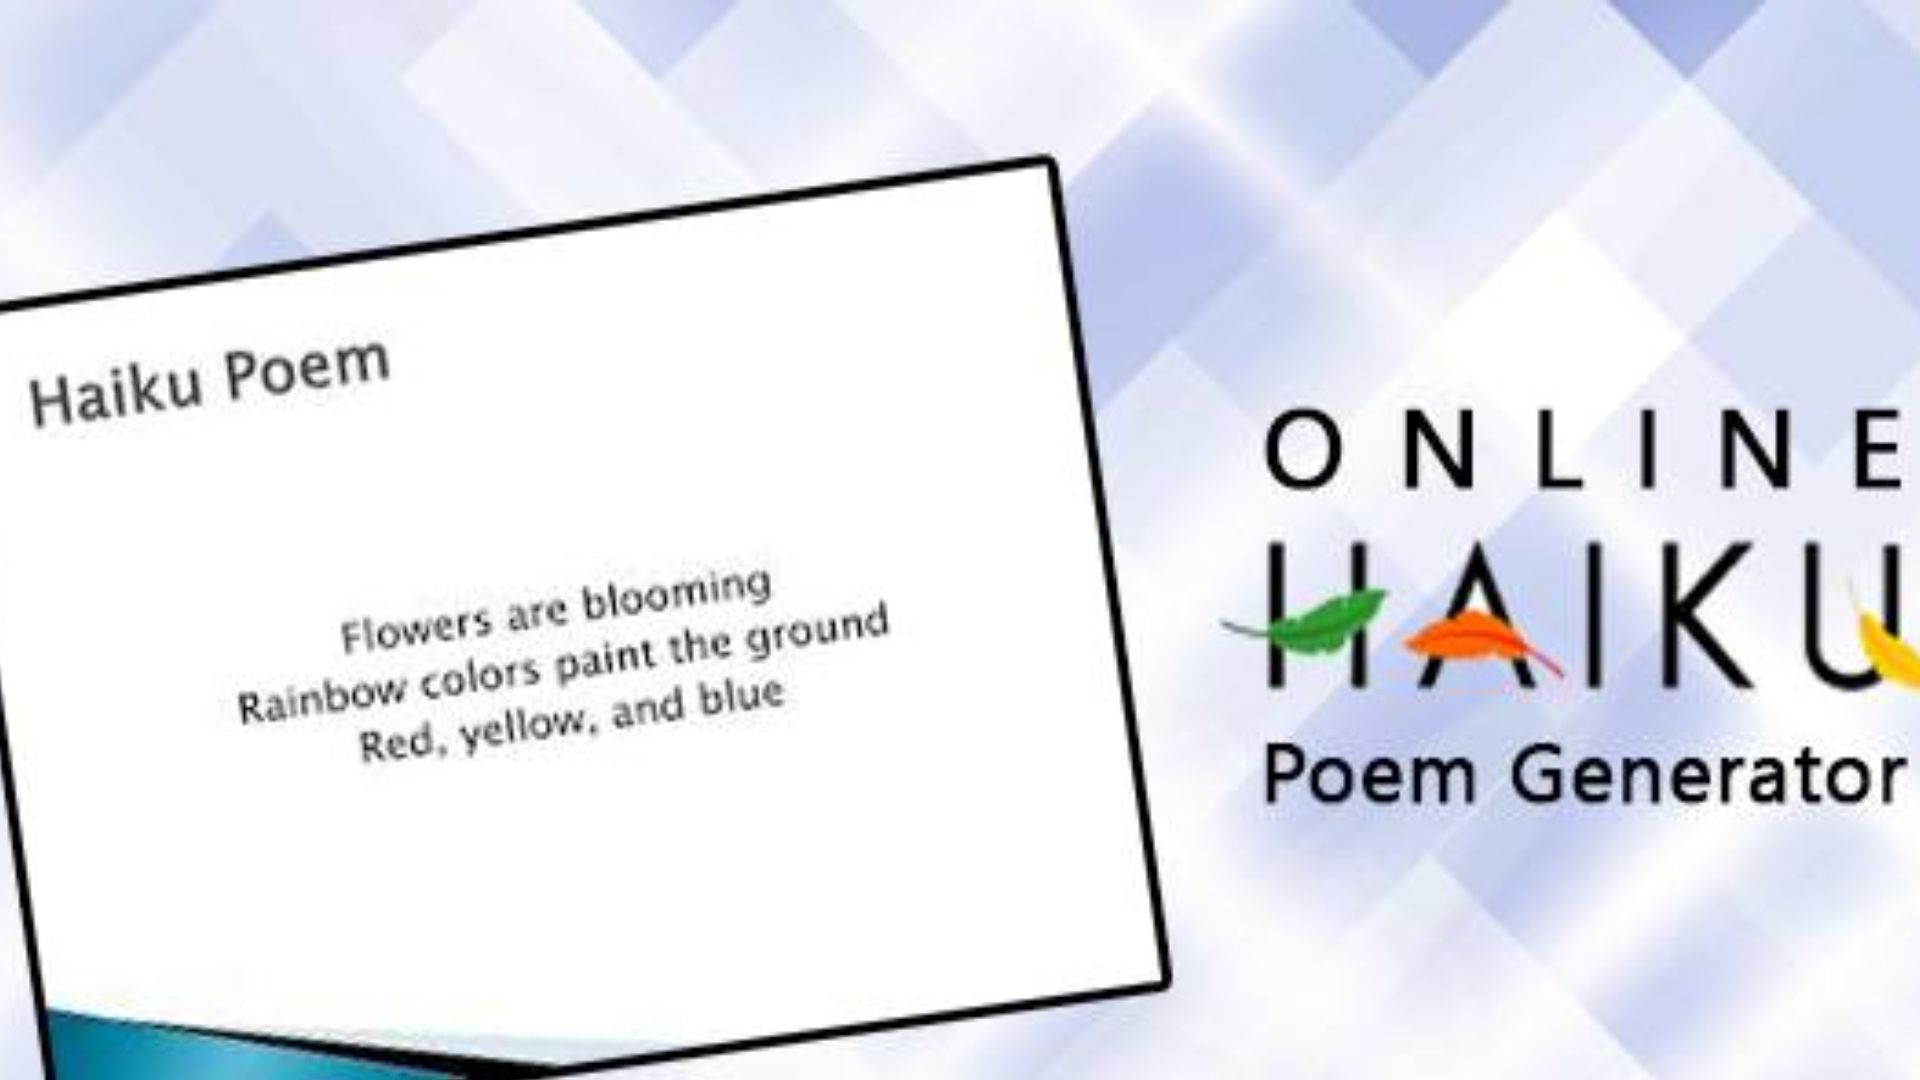 Haiku Poem Generator - A Tool That Generates Haiku Poems Based On Certain Parameters